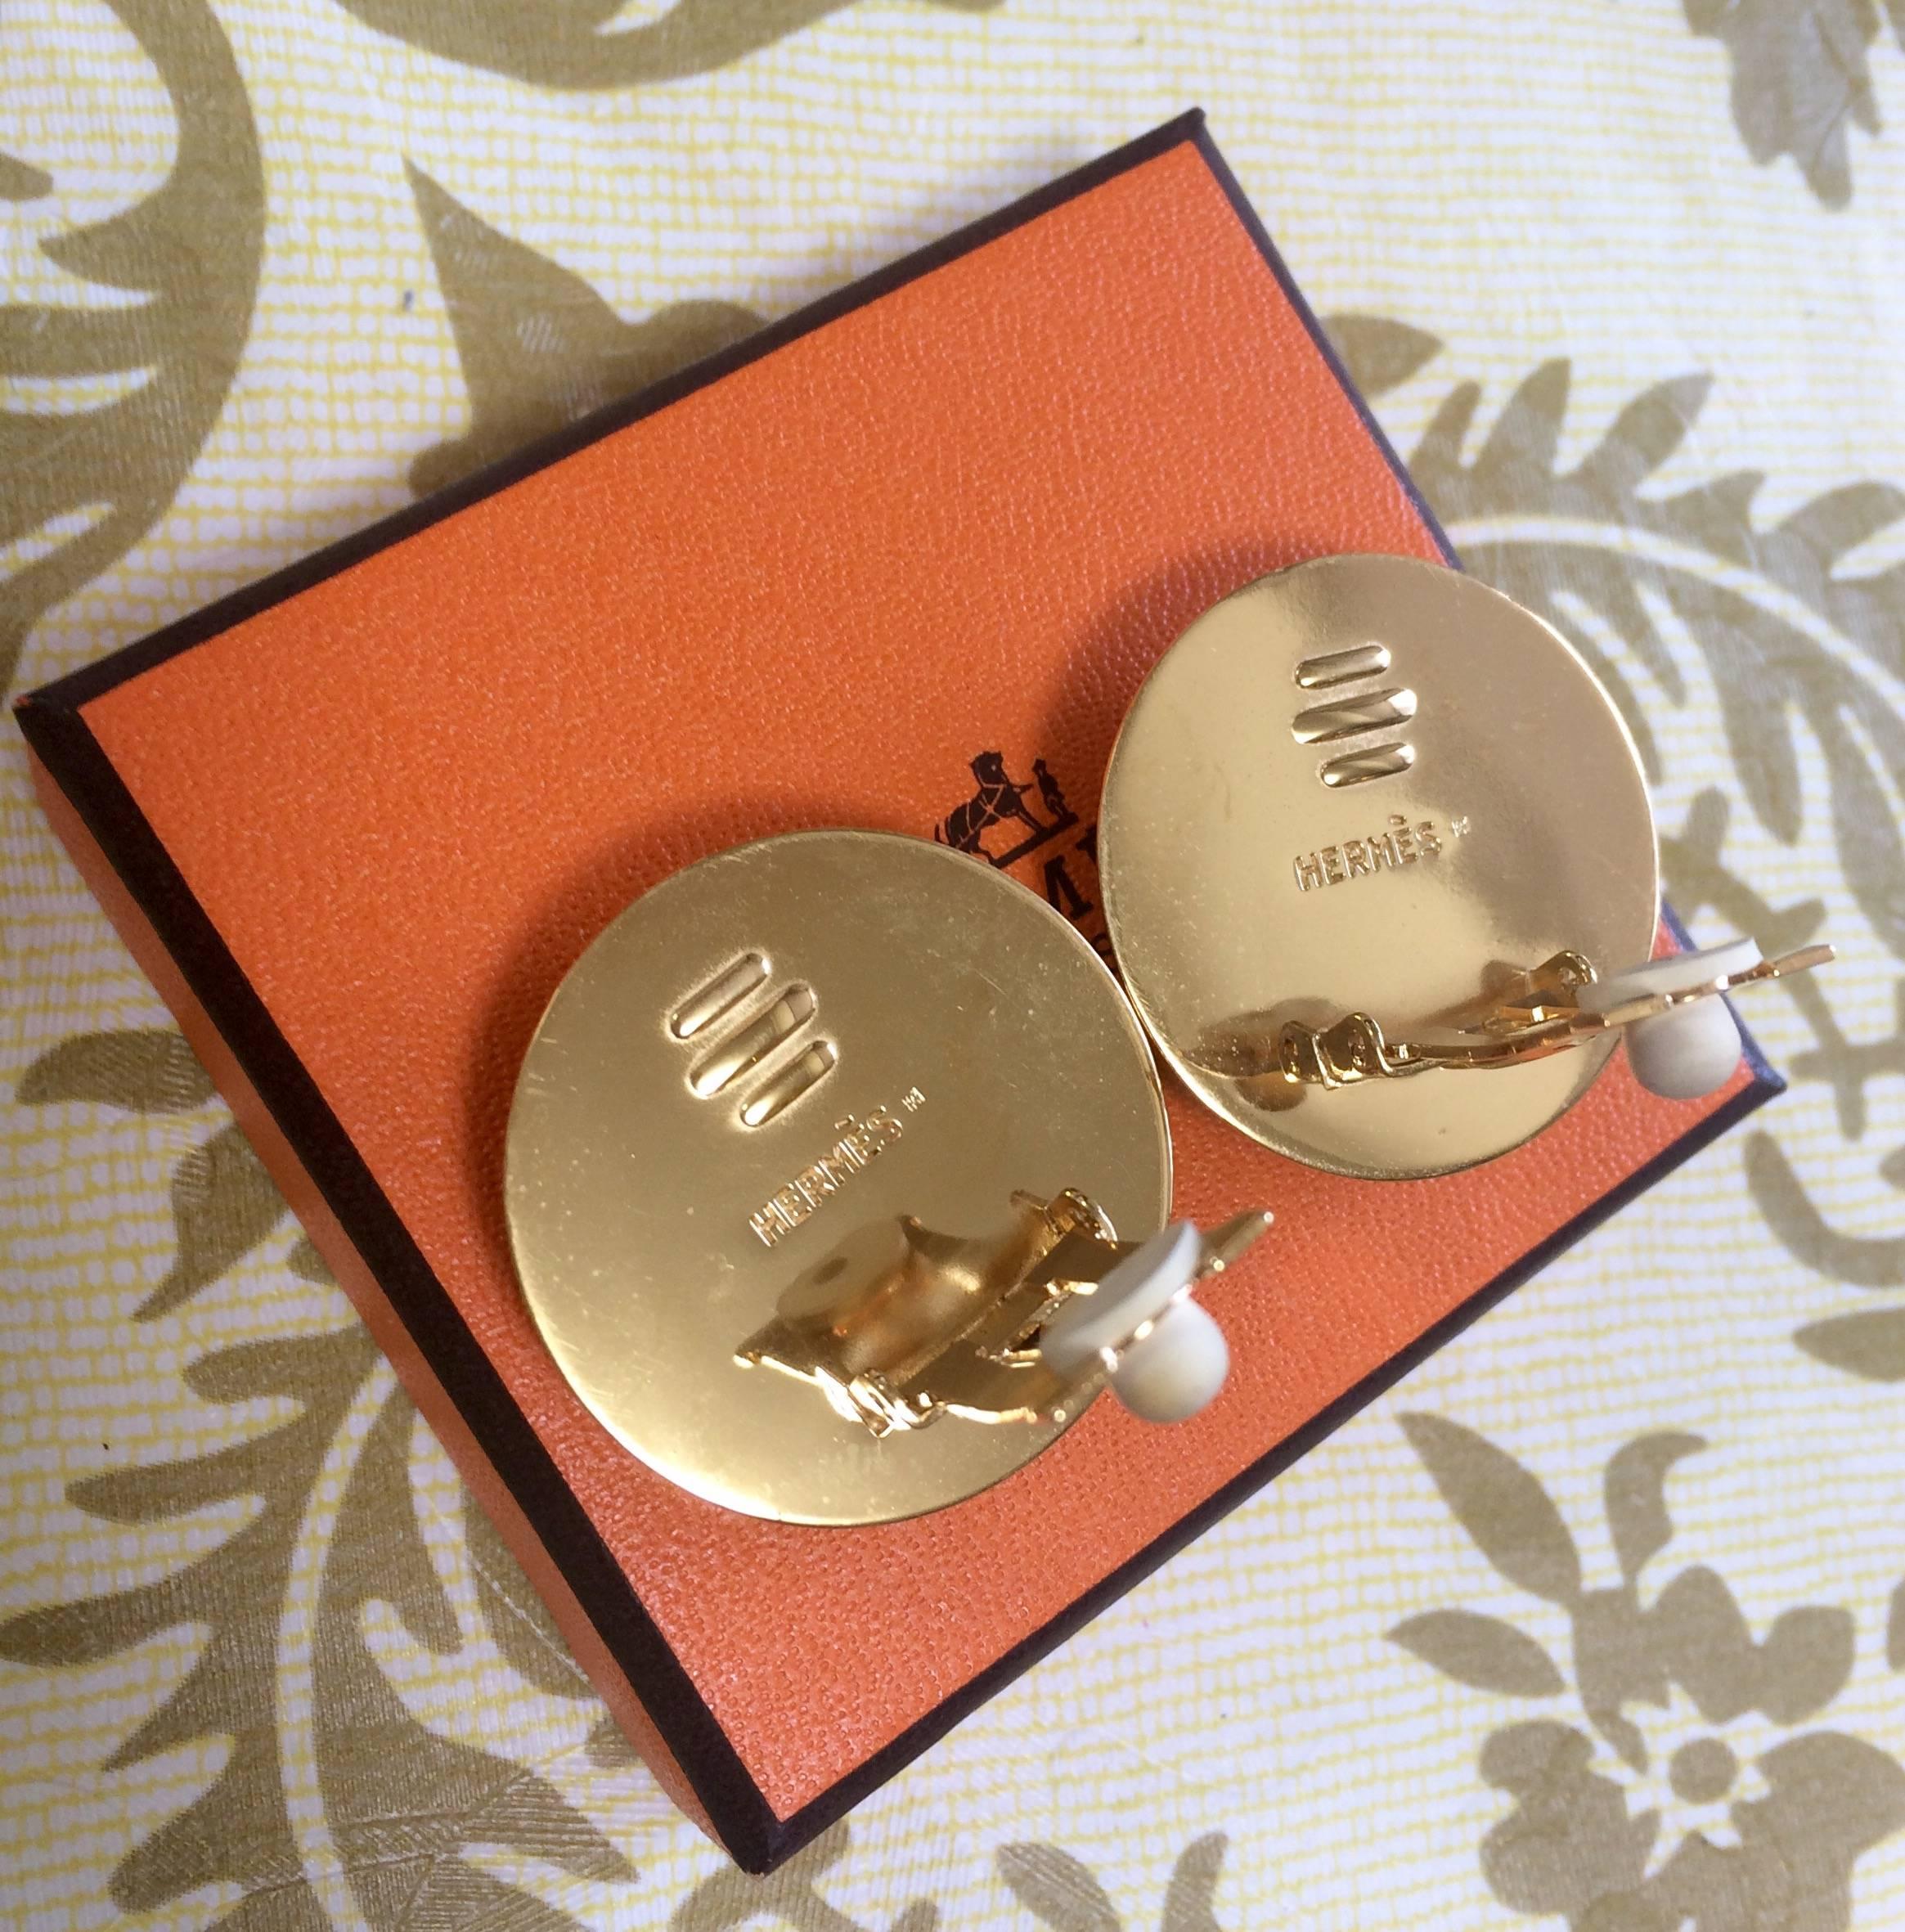 MINT. Vintage Hermes round cloisonne enamel golden earrings with squirrel design For Sale 2